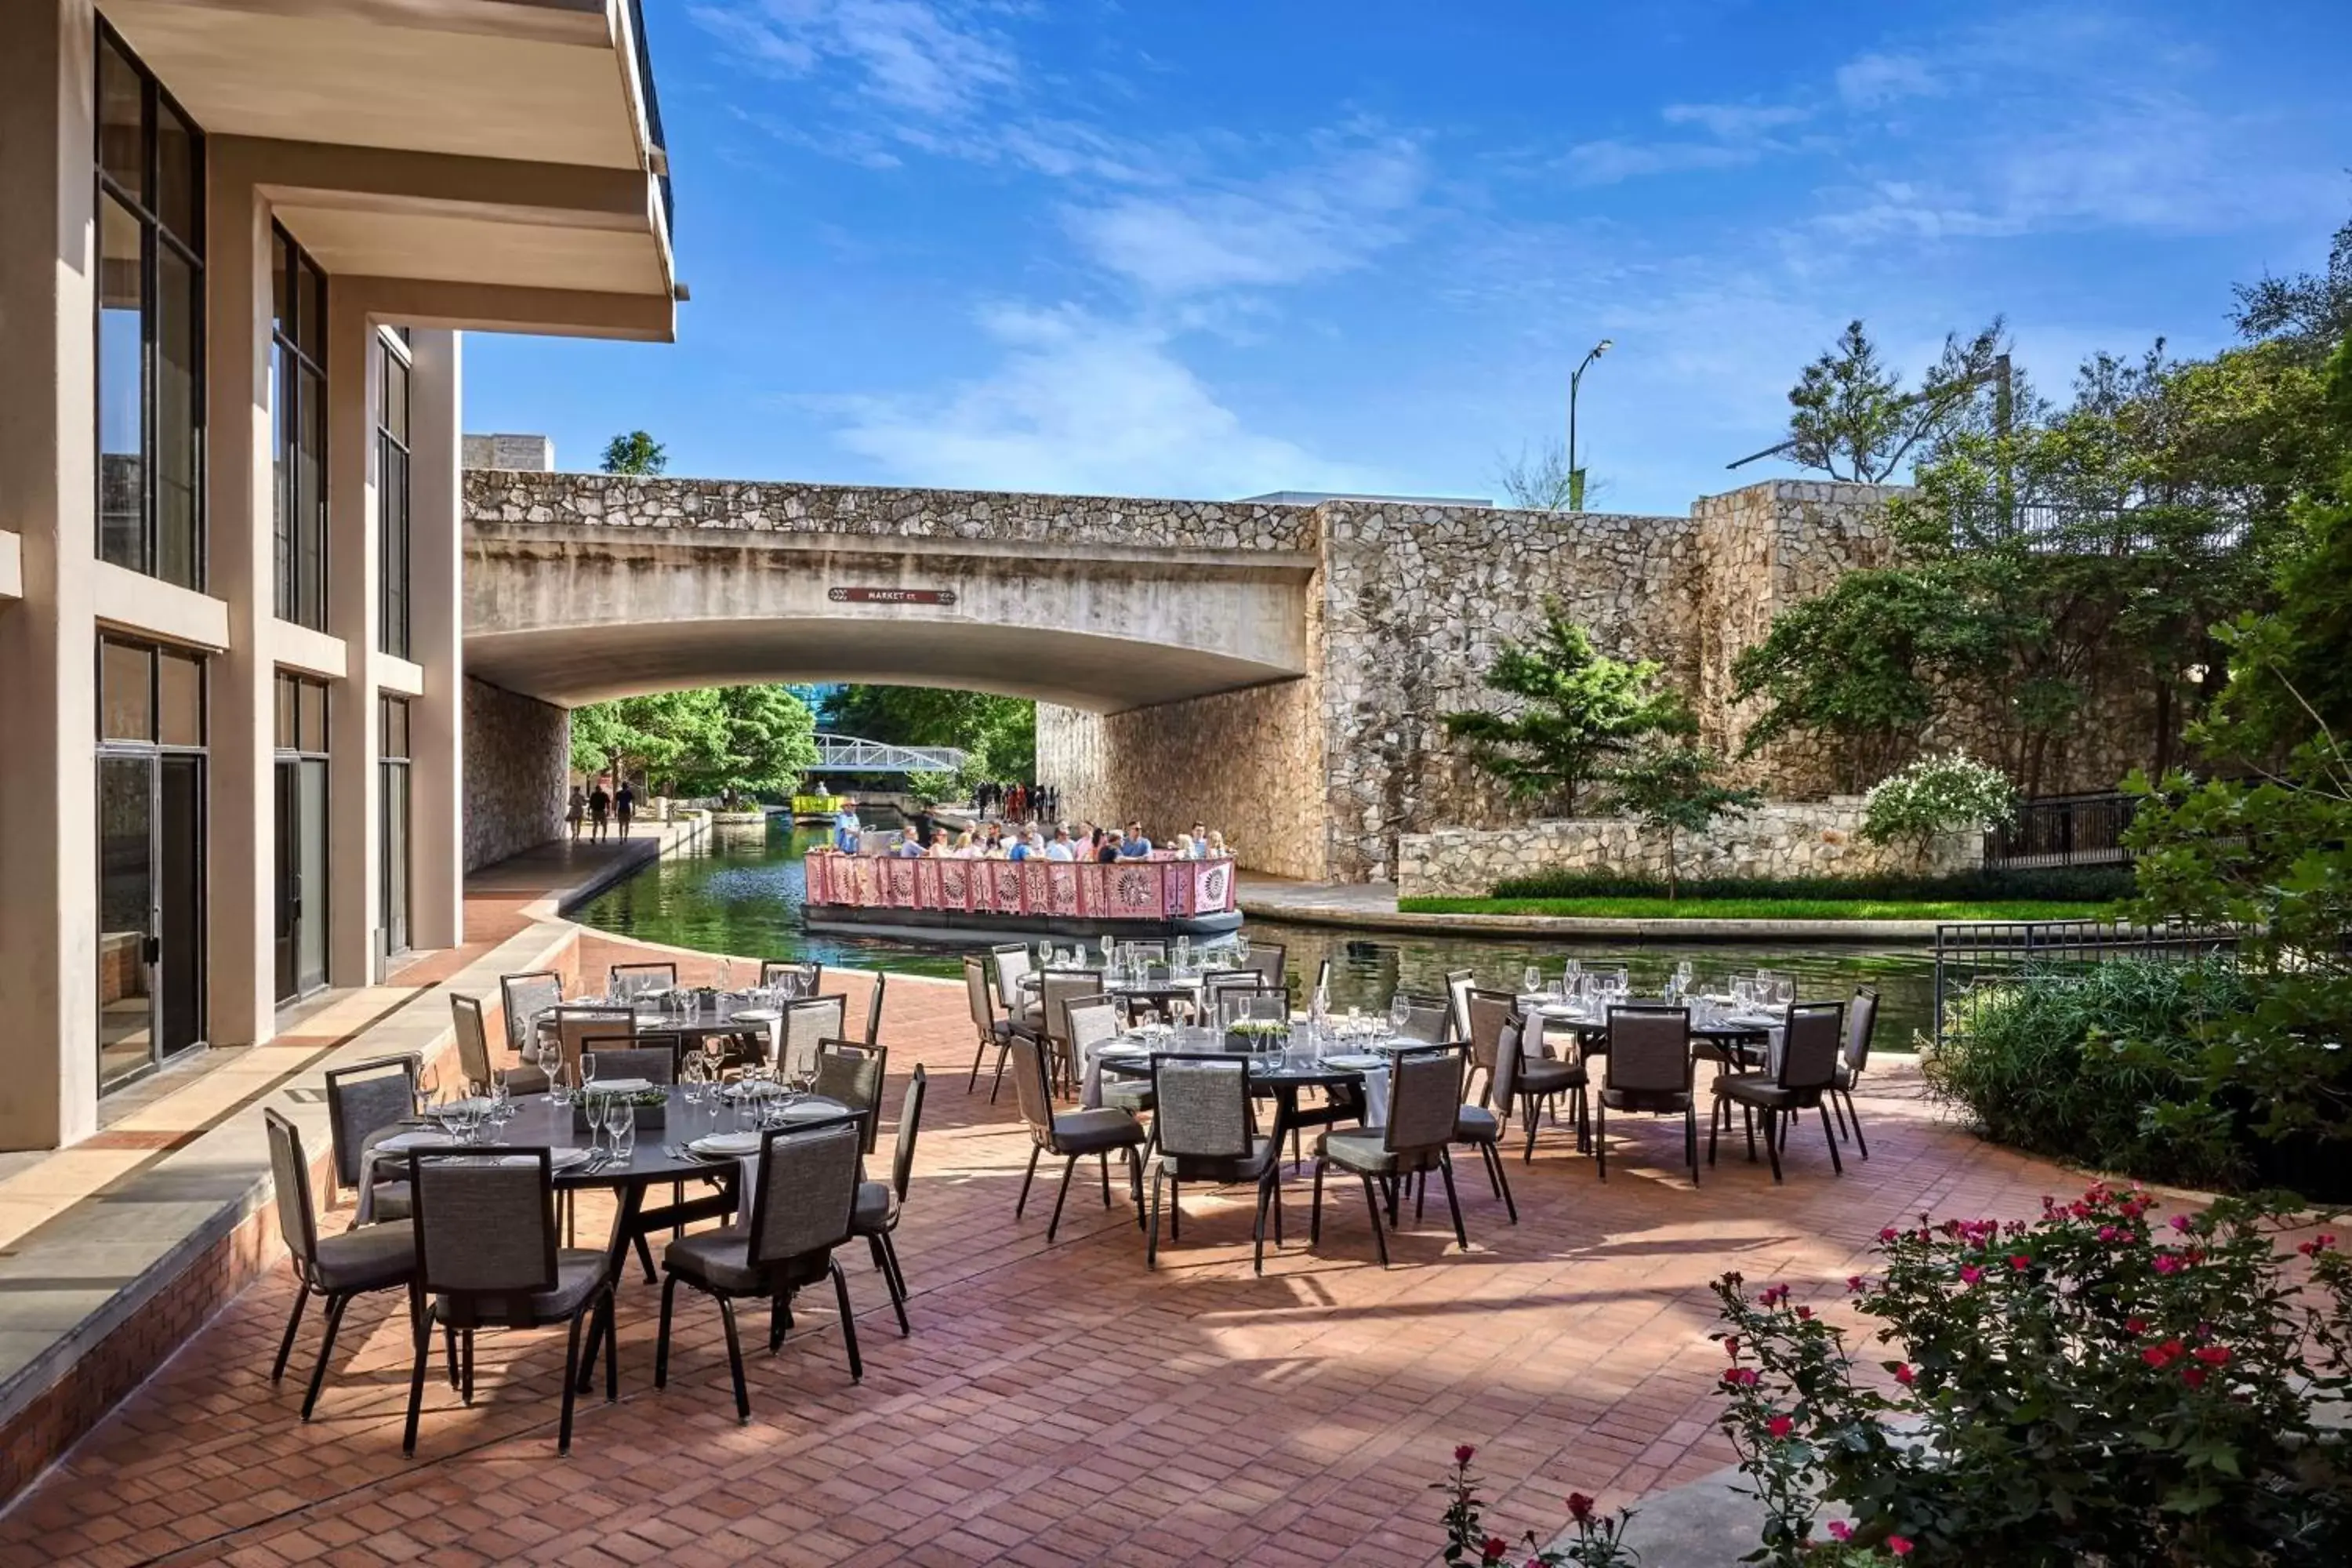 Restaurant/Places to Eat in San Antonio Marriott Rivercenter on the River Walk